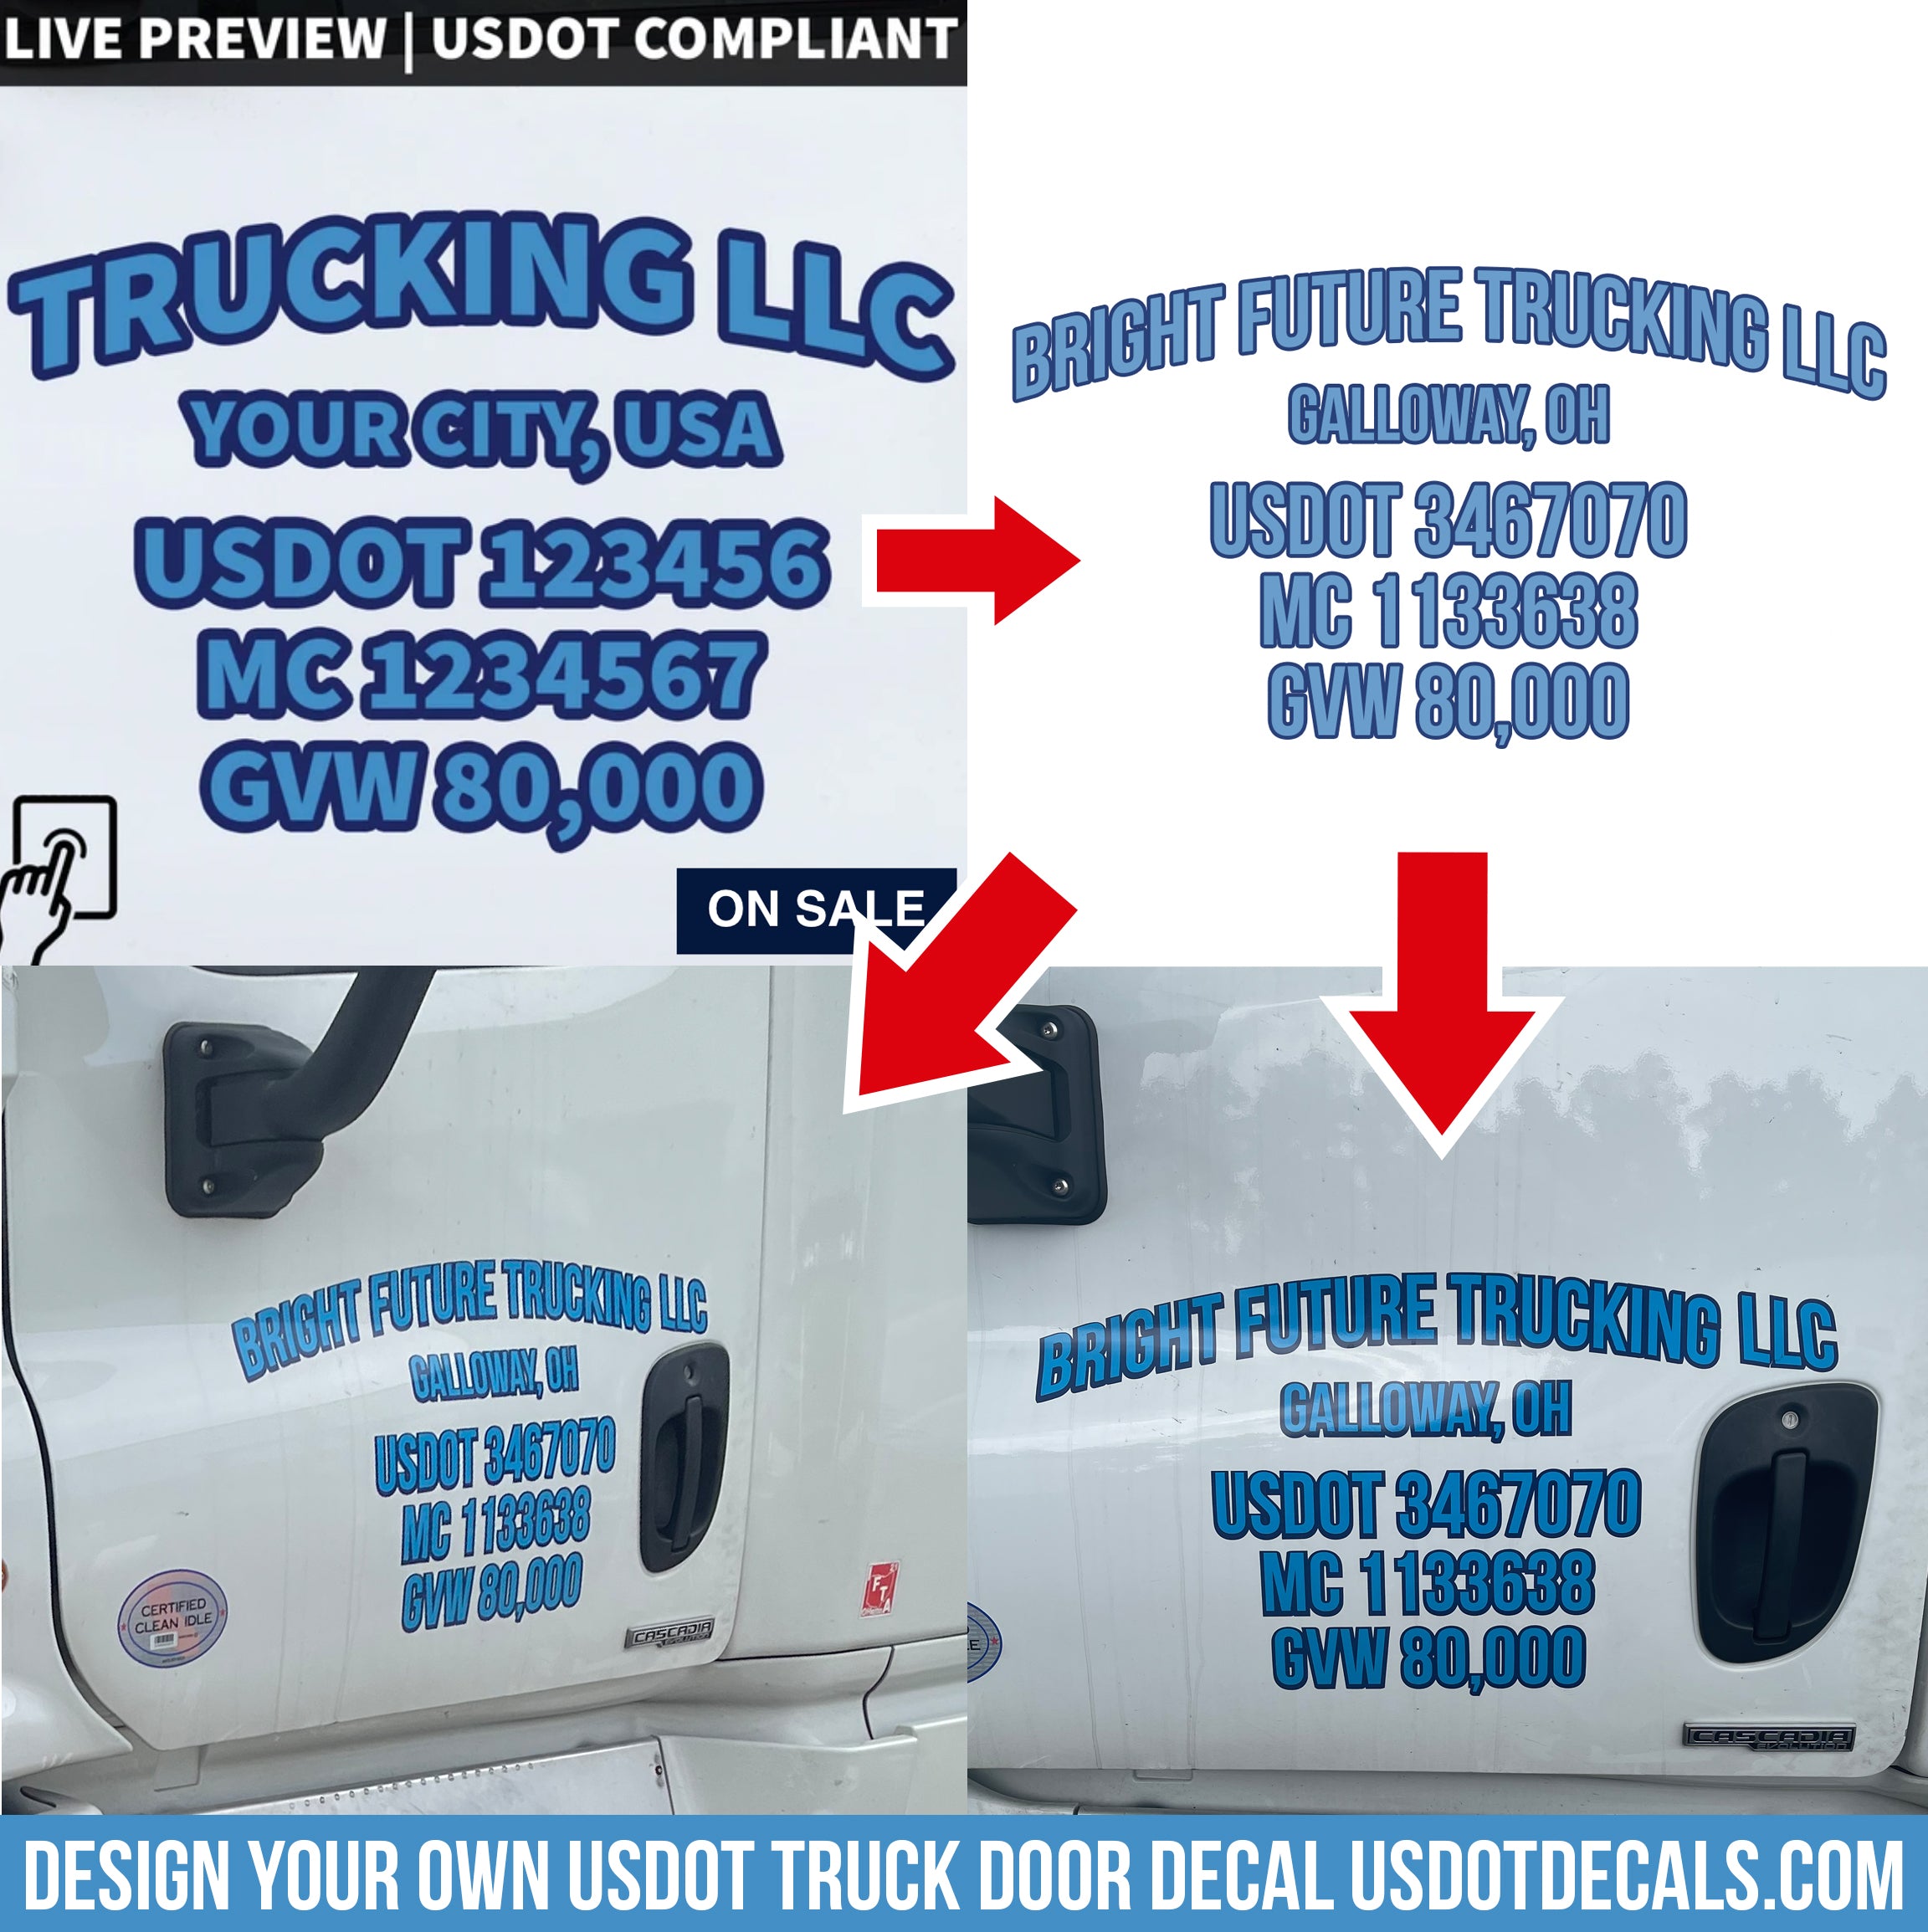 design own usdot truck decal lettering